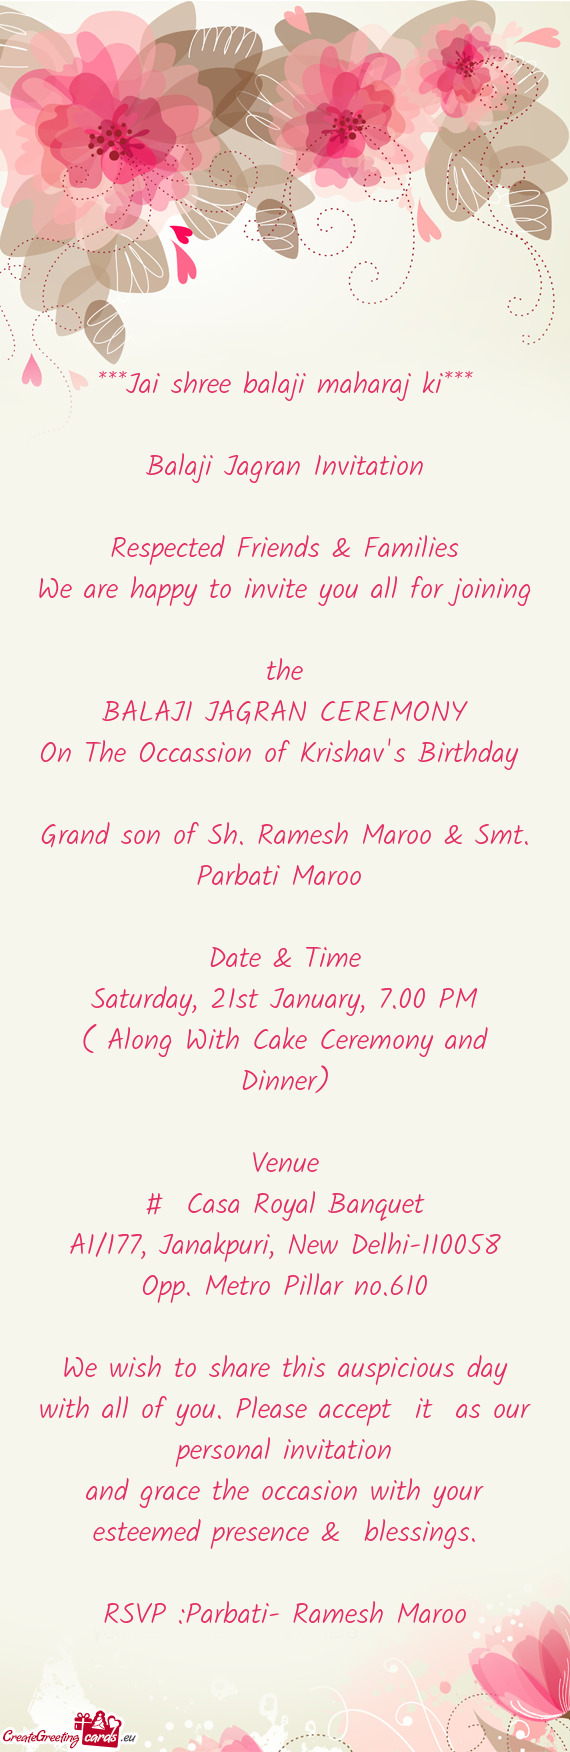 Balaji Jagran Invitation